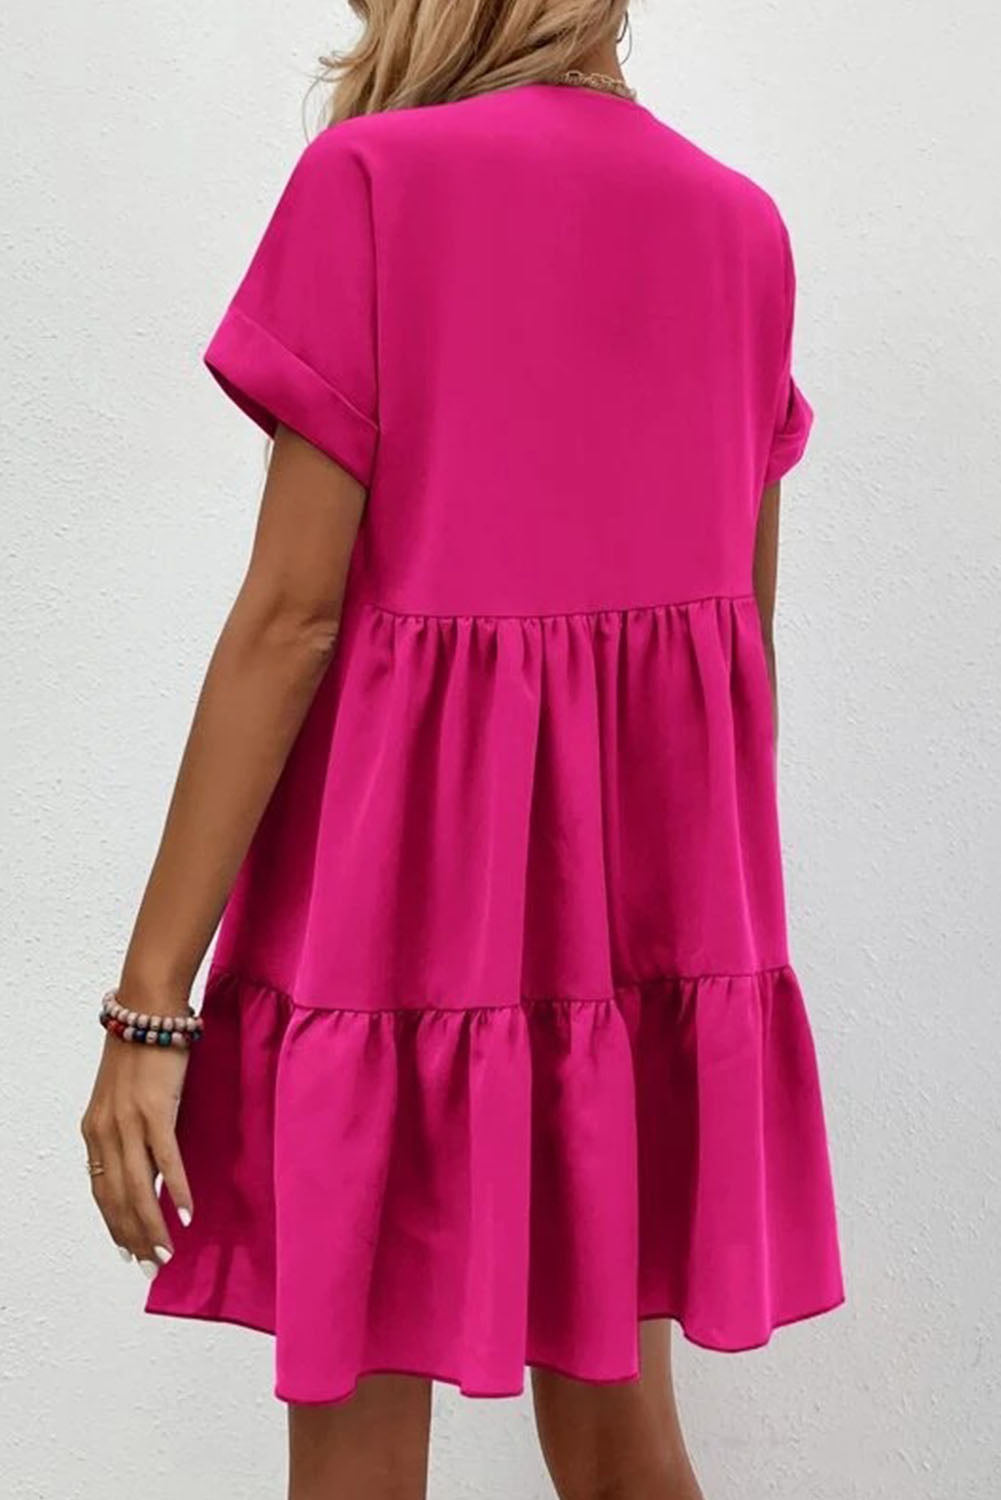 Rose Fresh and sweet V-neck solid color large swing casual skirt dress Mini Dresses JT's Designer Fashion